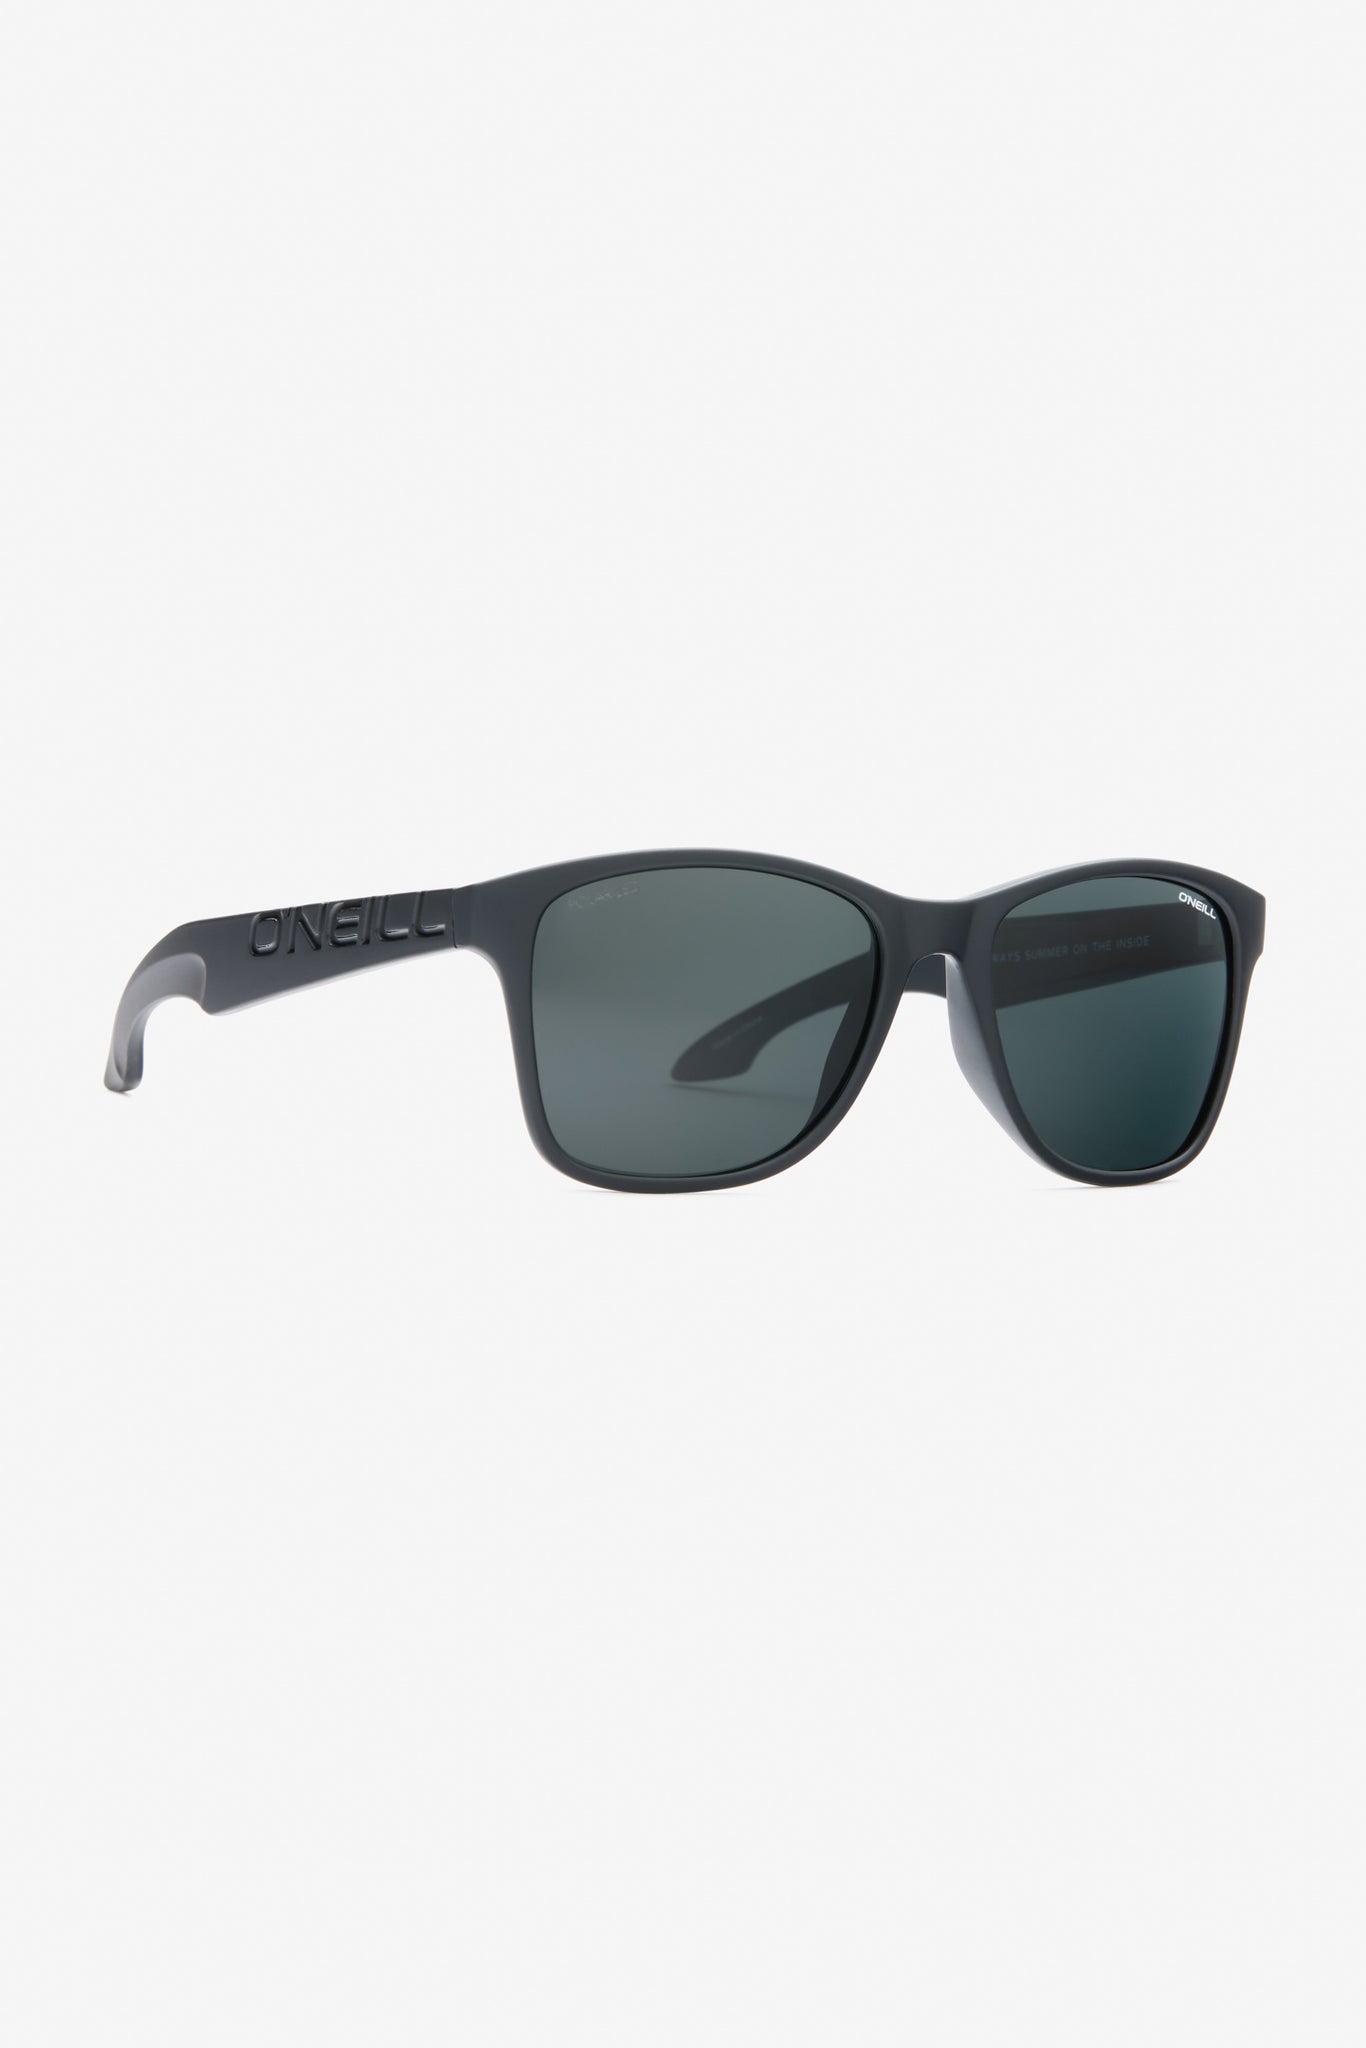 Shore 2.0 Sunglasses - Blk Green | O'Neill